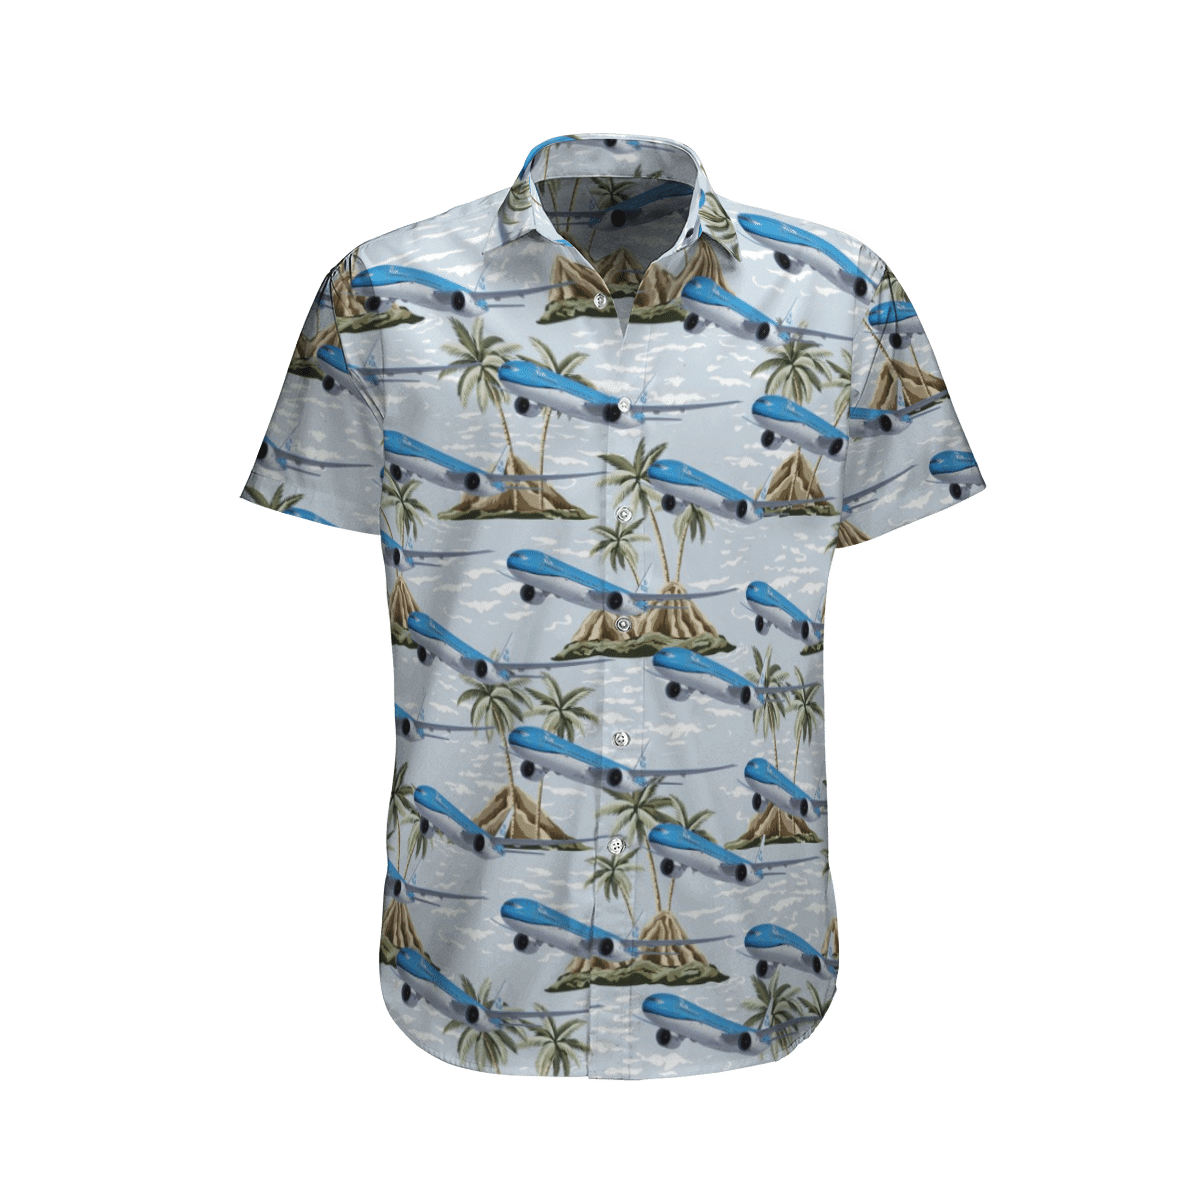 Enjoy your summer with top cool hawaiian shirt below 30